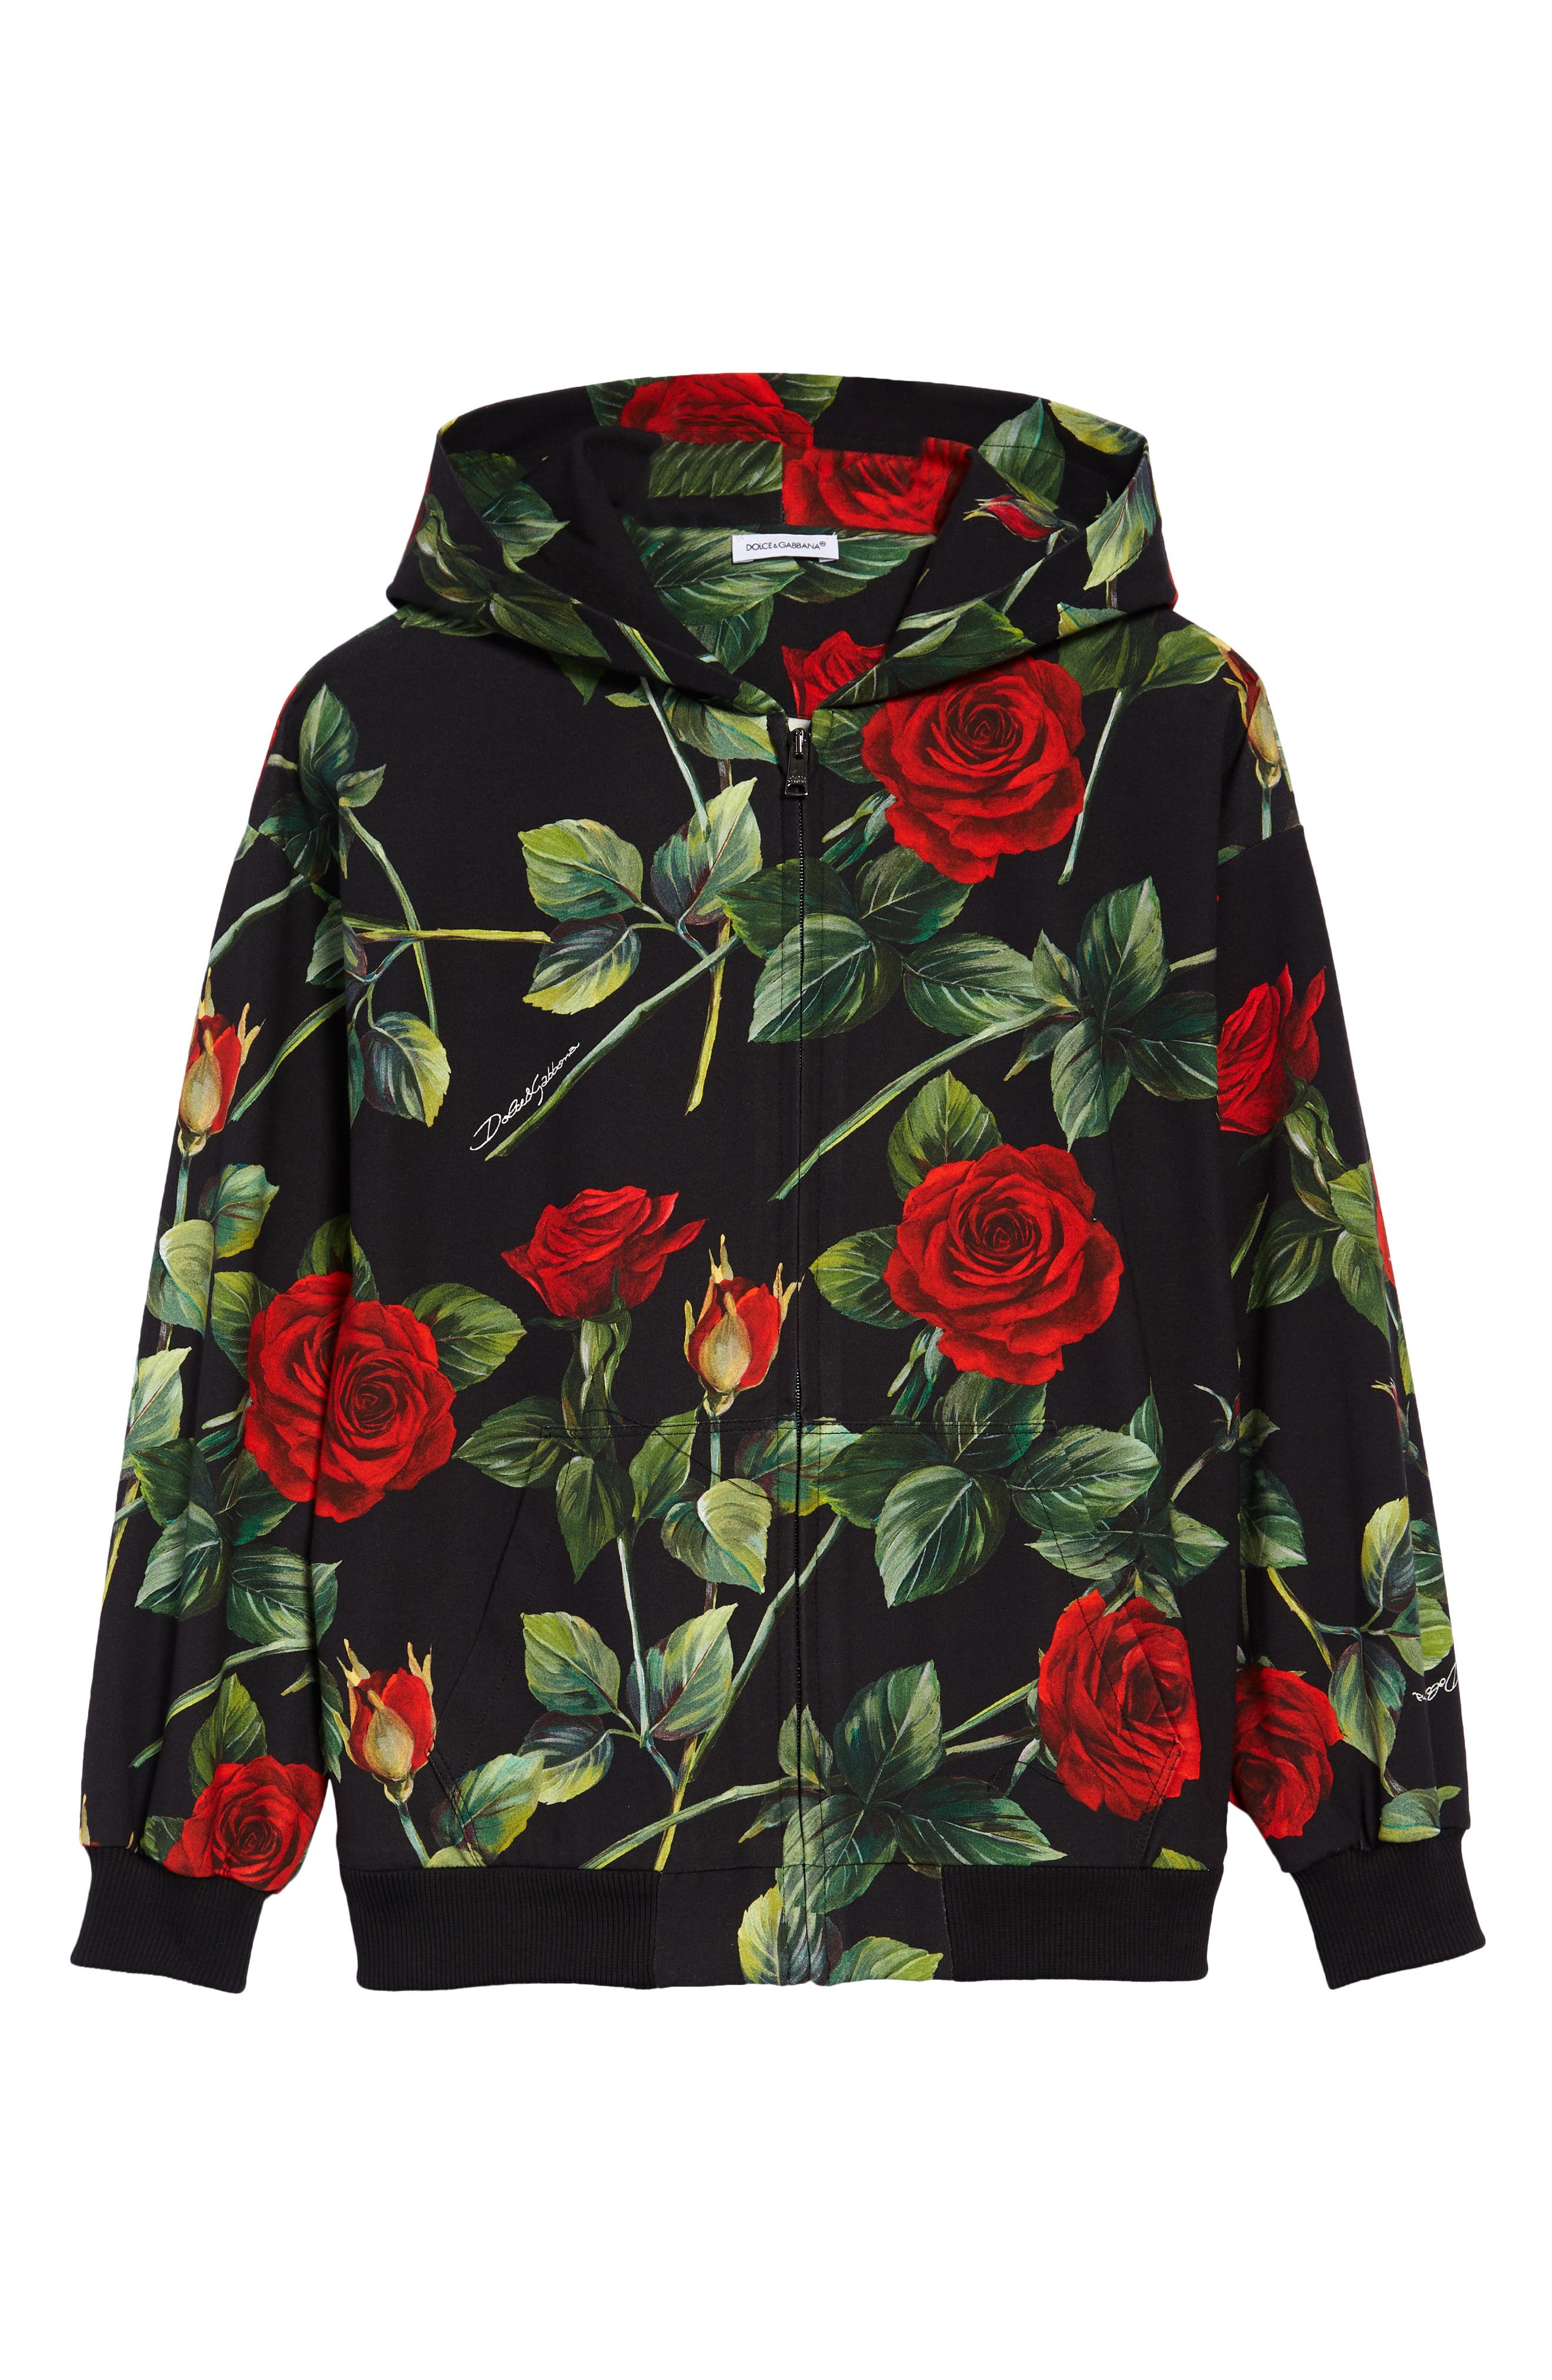 Dolce & Gabbana Kids' Rose Print Zip Hoodie at Nordstrom, Size 6 Us